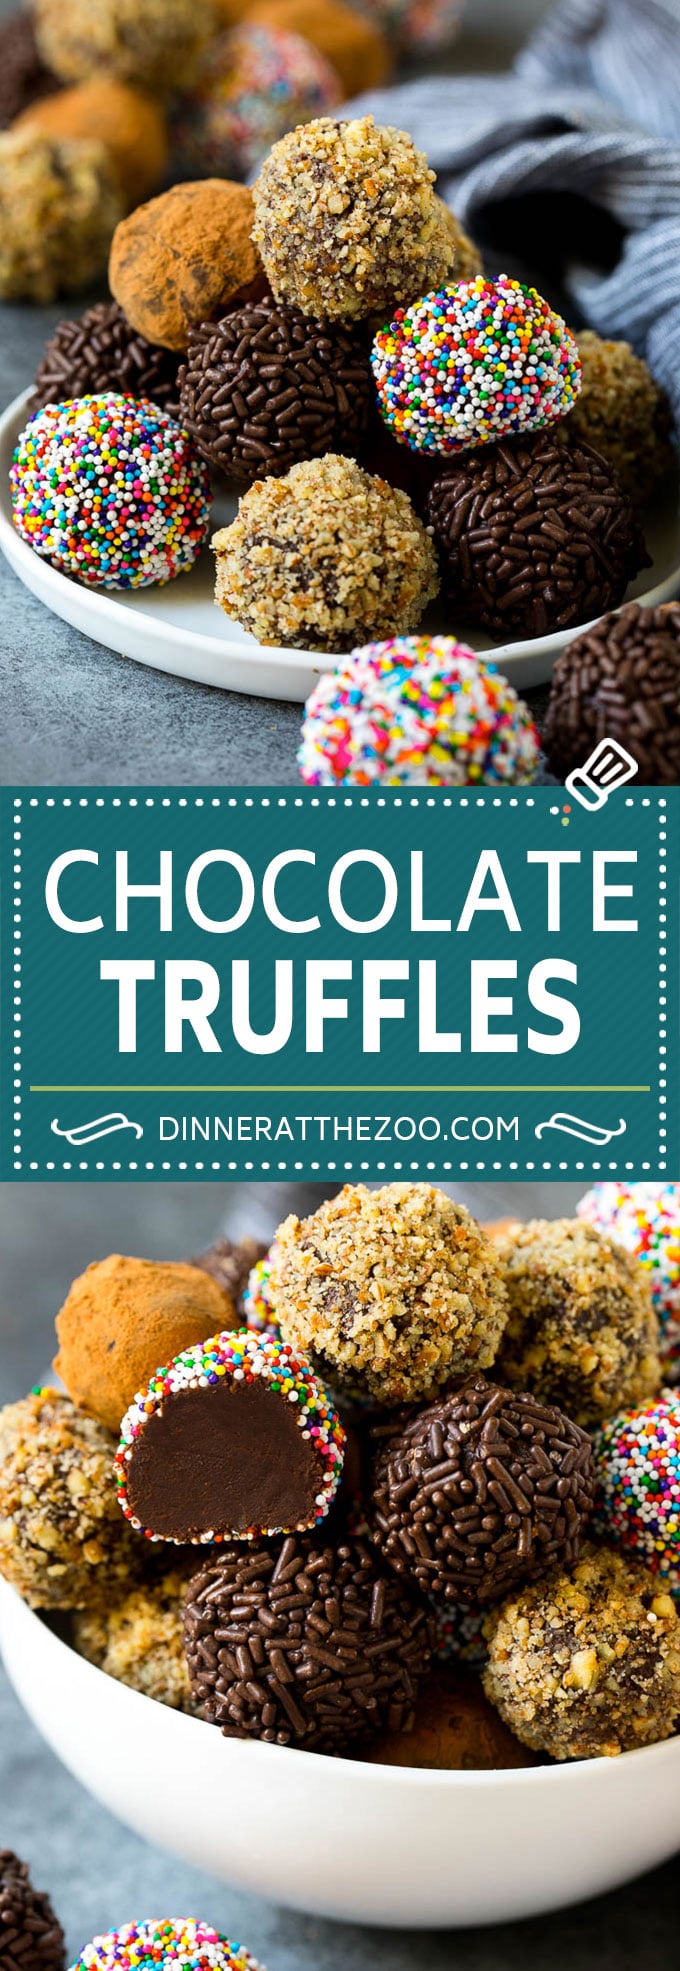 Chocolate Truffles Recipe | Homemade Candy #candy #truffles #chocolate #dessert #sprinkles #dinneratthezoo